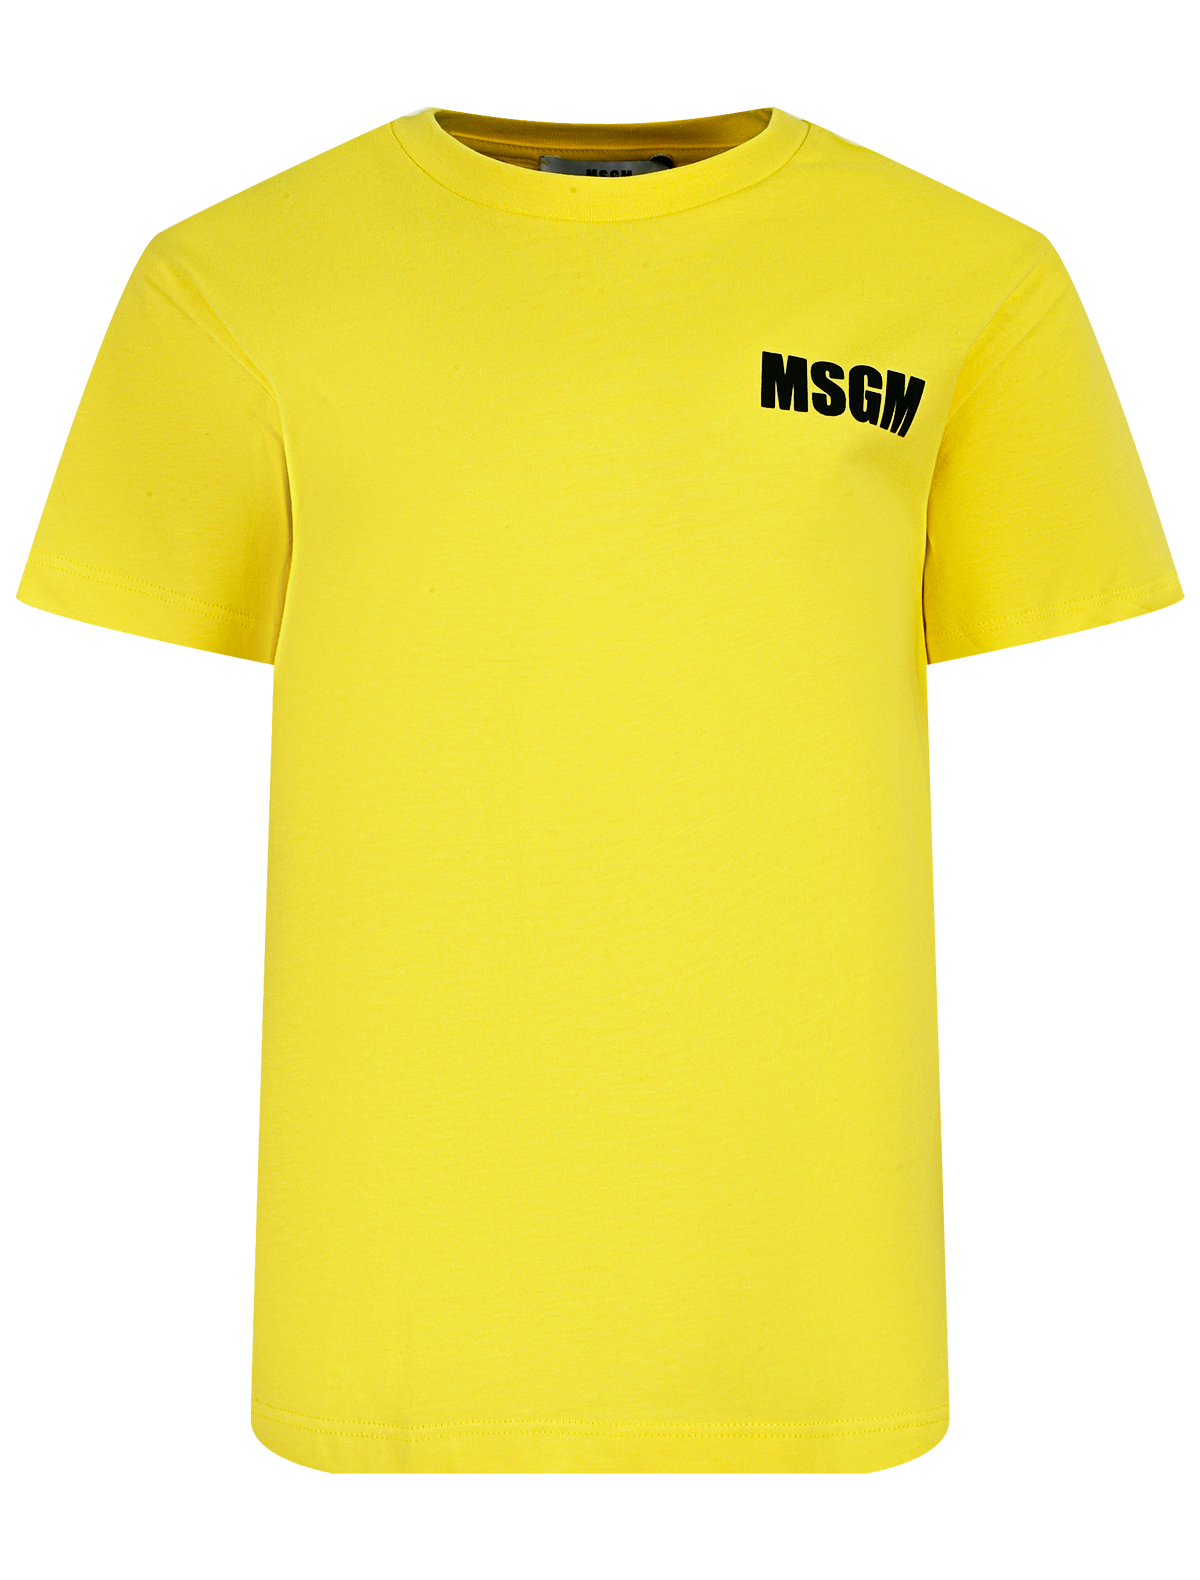 Футболка MSGM 2648593, цвет желтый, размер 11 1134529410992 - фото 1